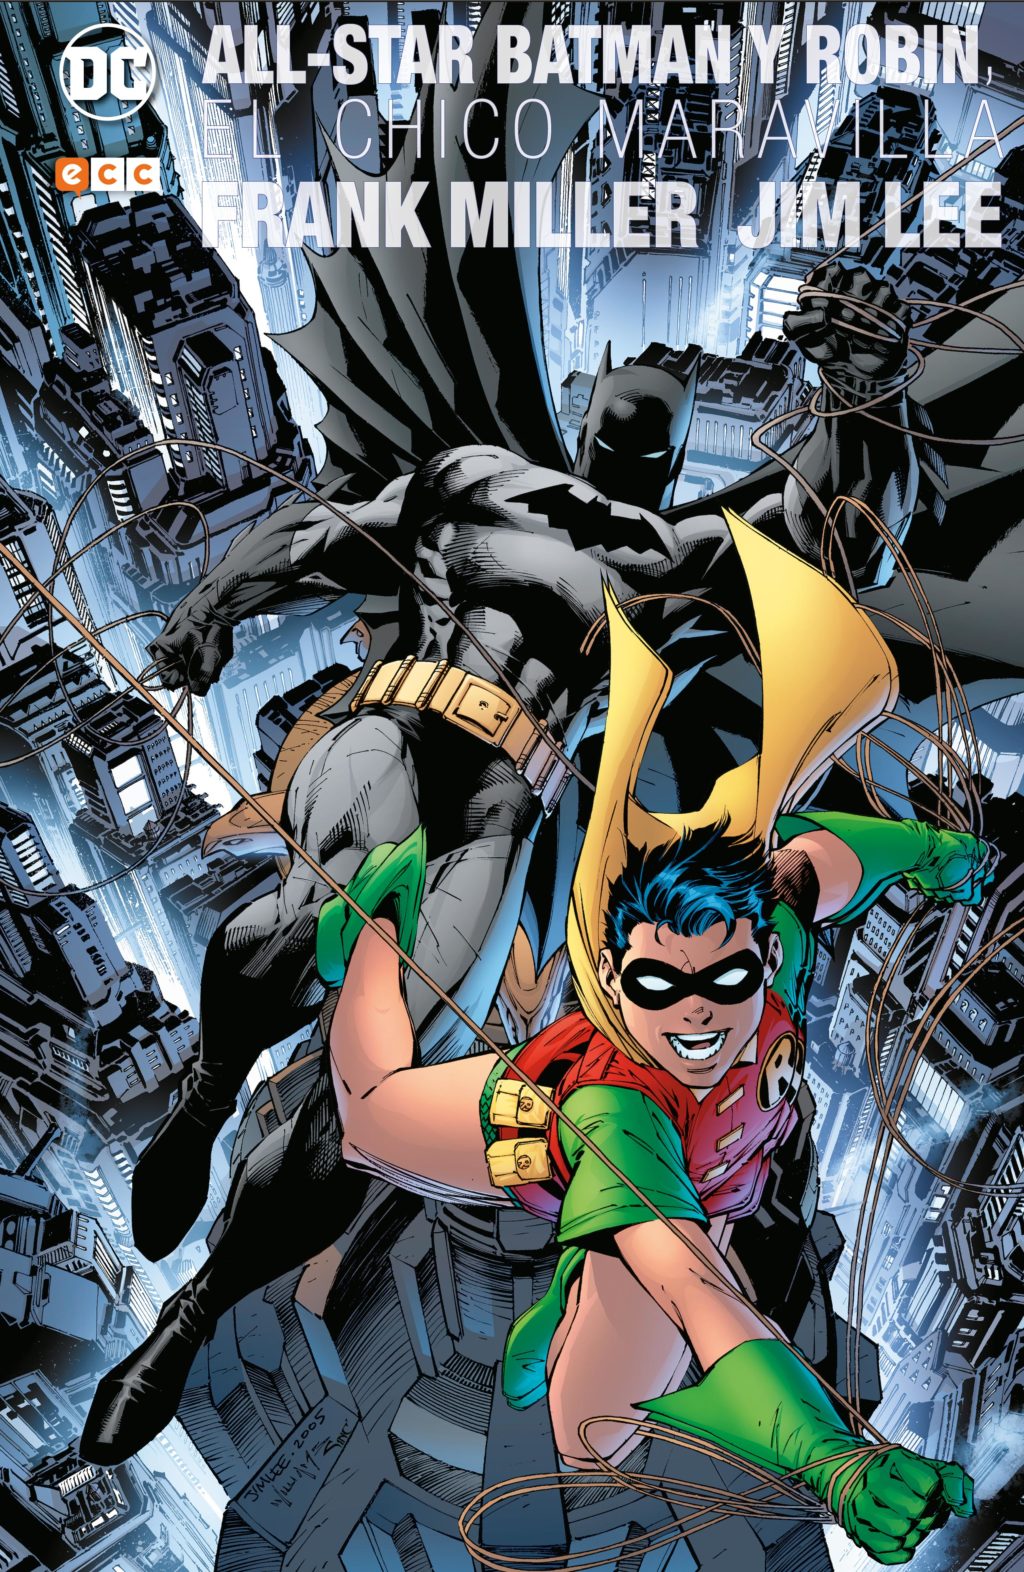 Reseña: AllStar Batman & Robin, El chico Maravilla | Reserva de Maná